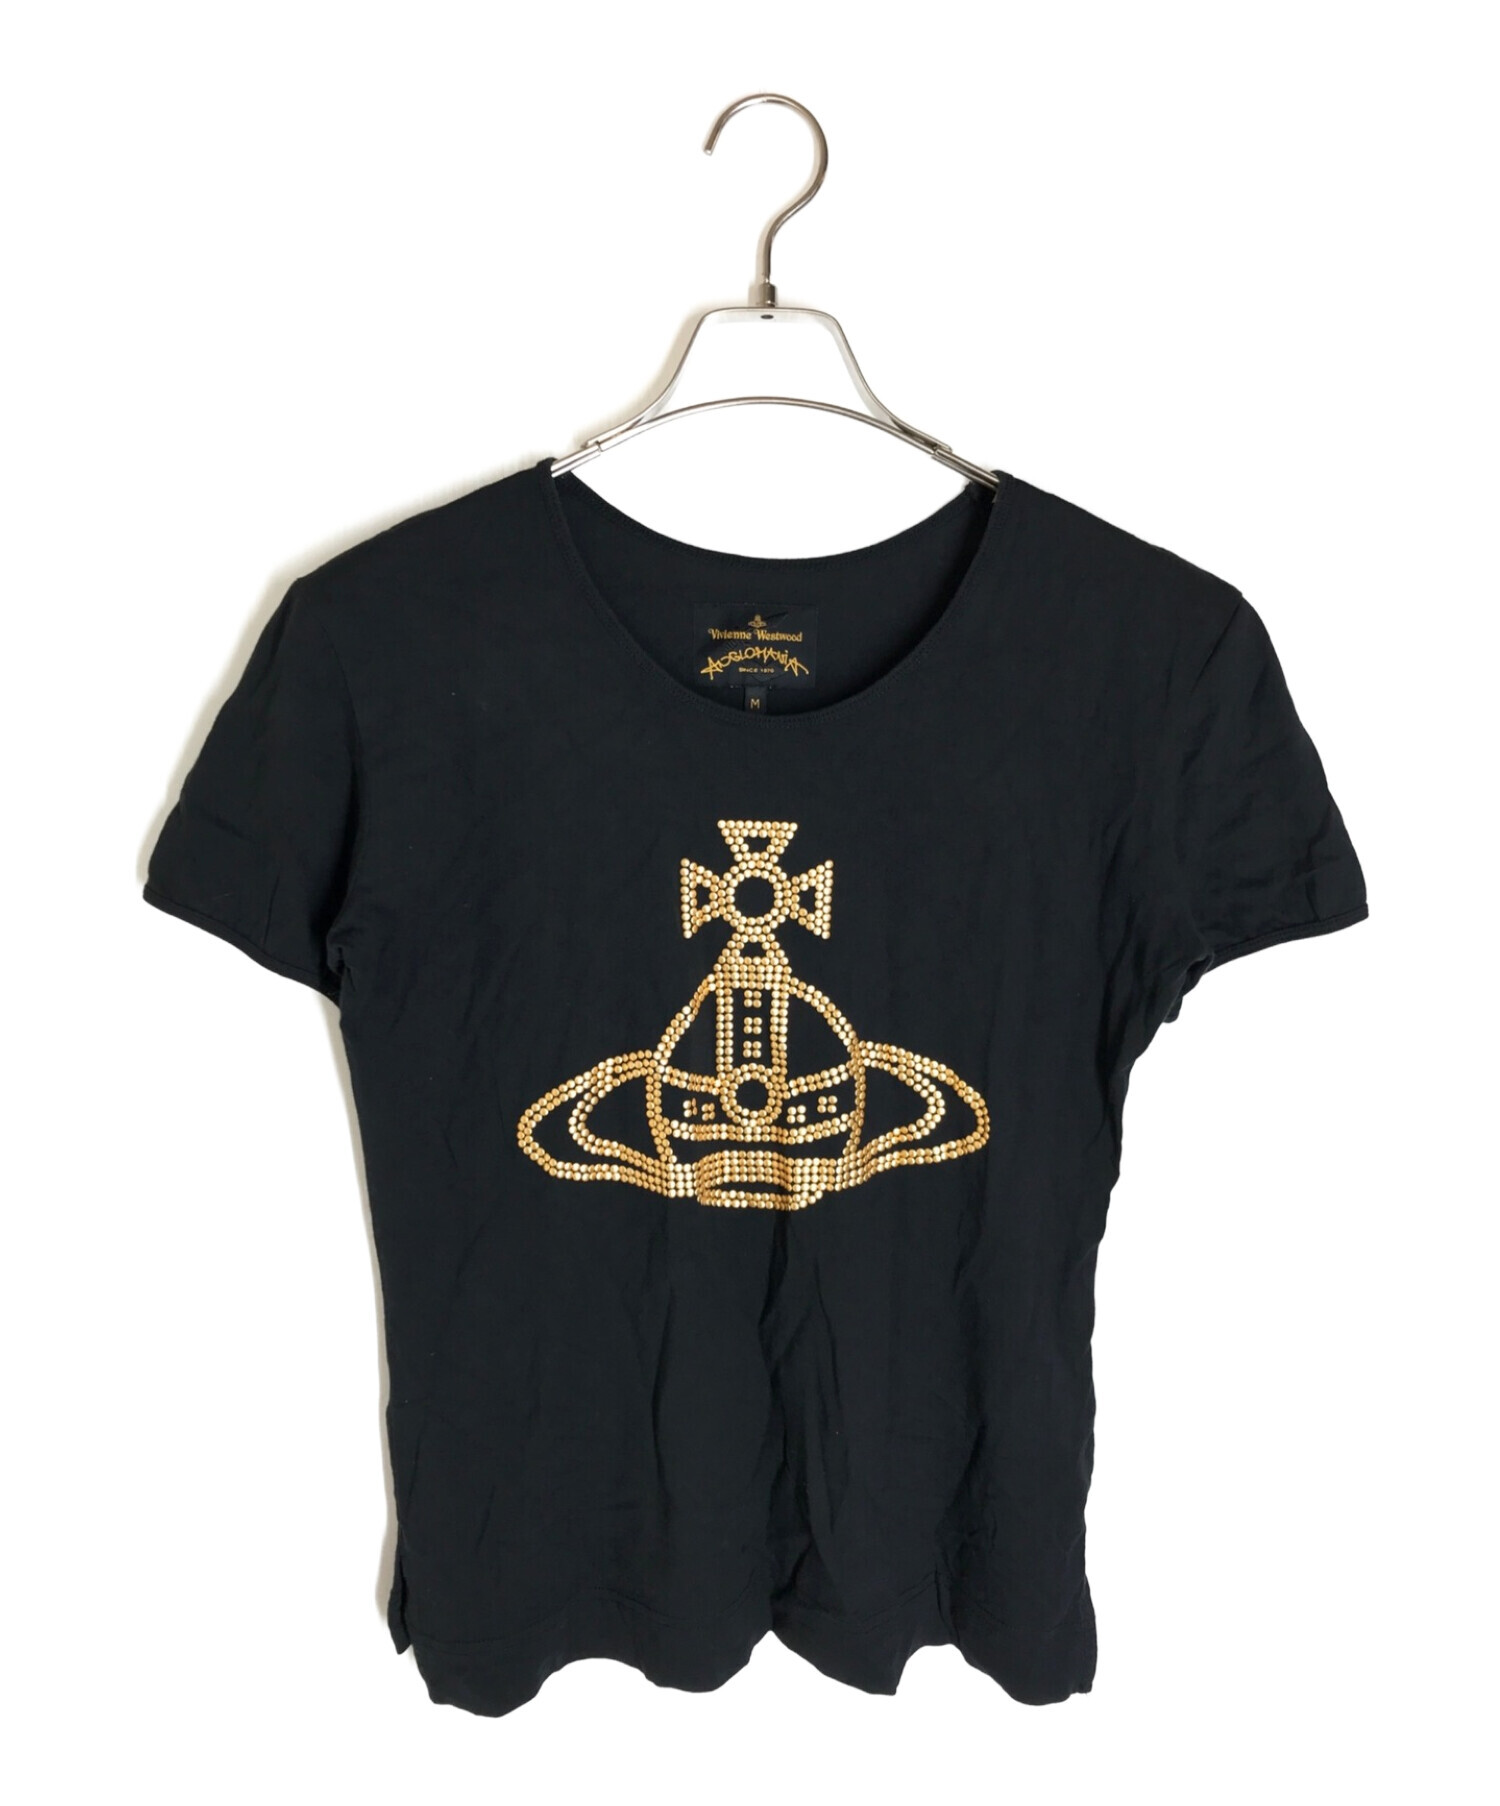 Vivienne Westwood ANGLOMANIA (ヴィヴィアンウエストウッド アングロマニア) オーブロゴスタッズTシャツ  ブラック×ゴールド サイズ:M